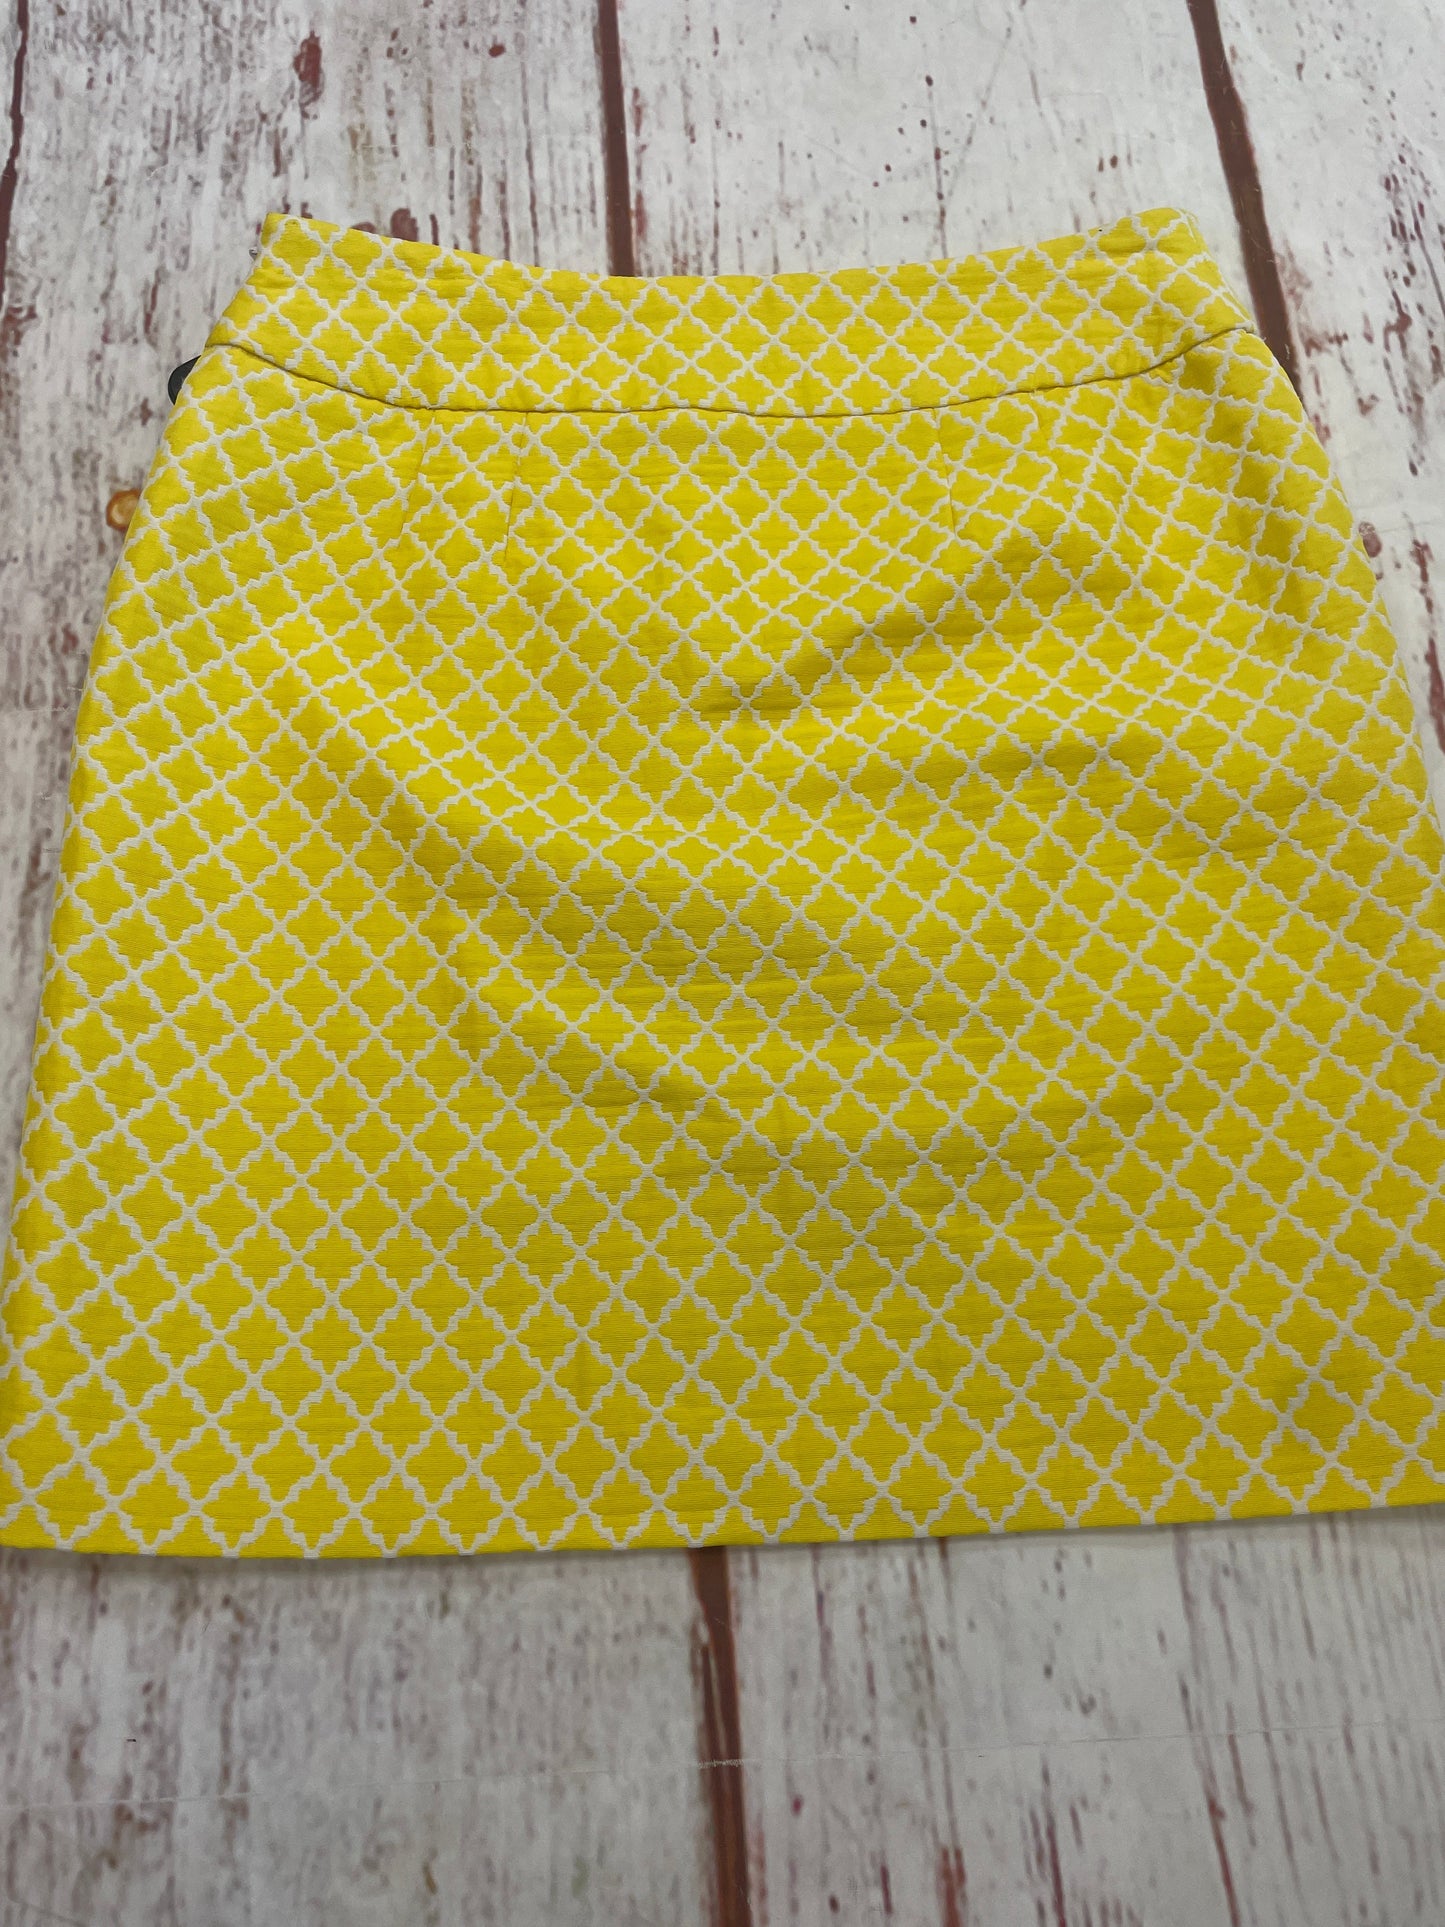 Skirt Mini & Short By Ann Taylor O  Size: 4